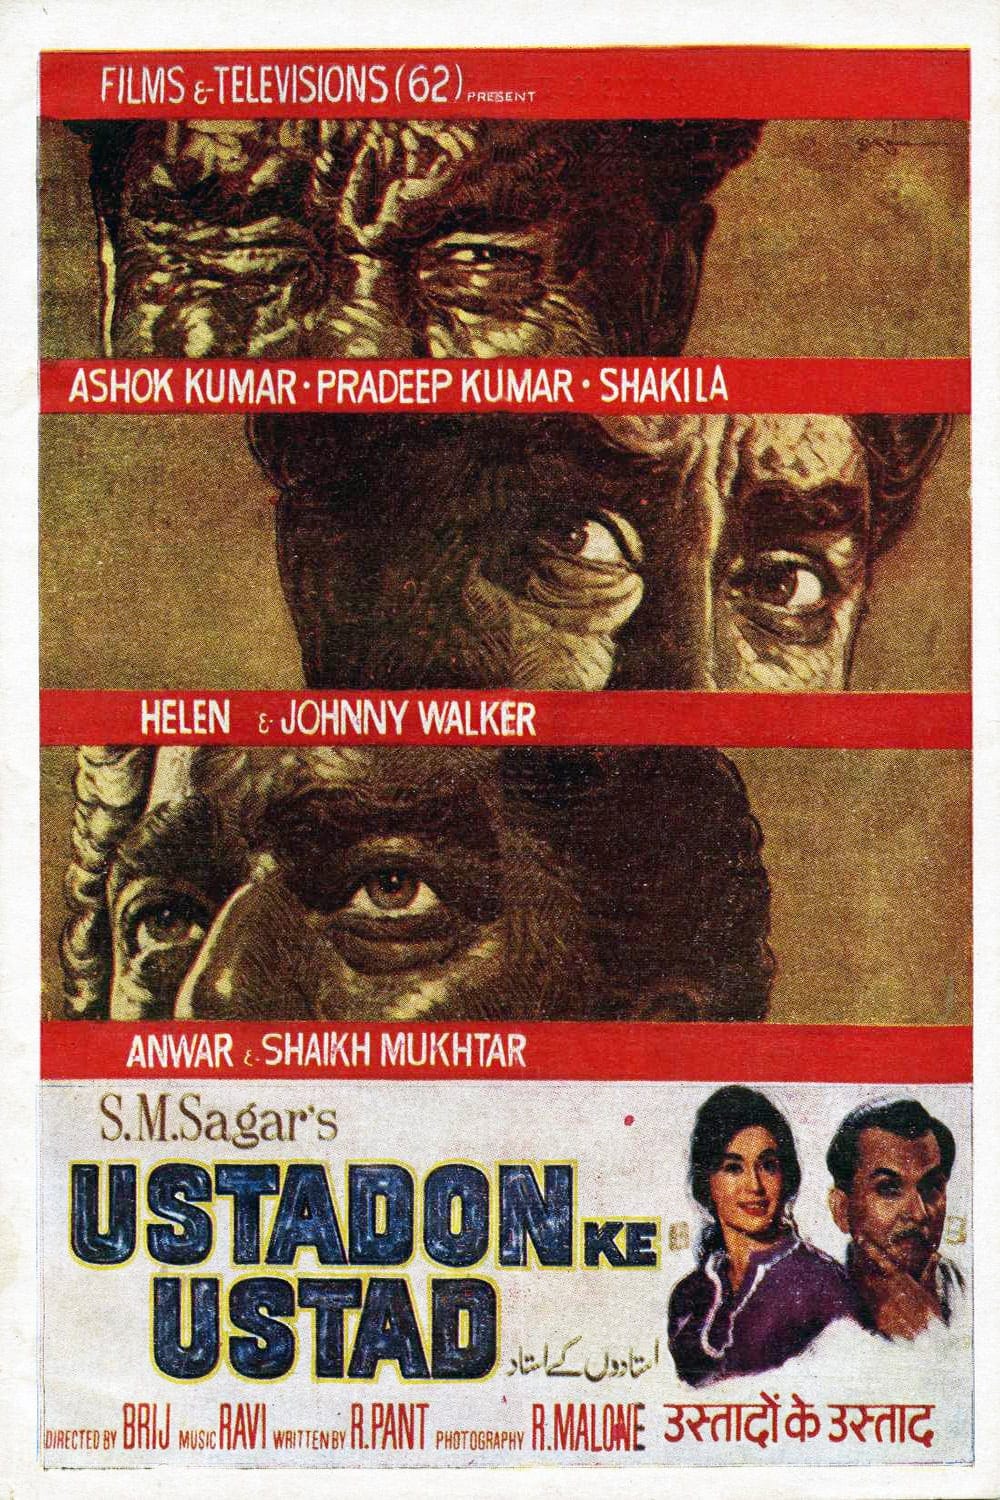 Poster for the movie "Ustadon Ke Ustad"